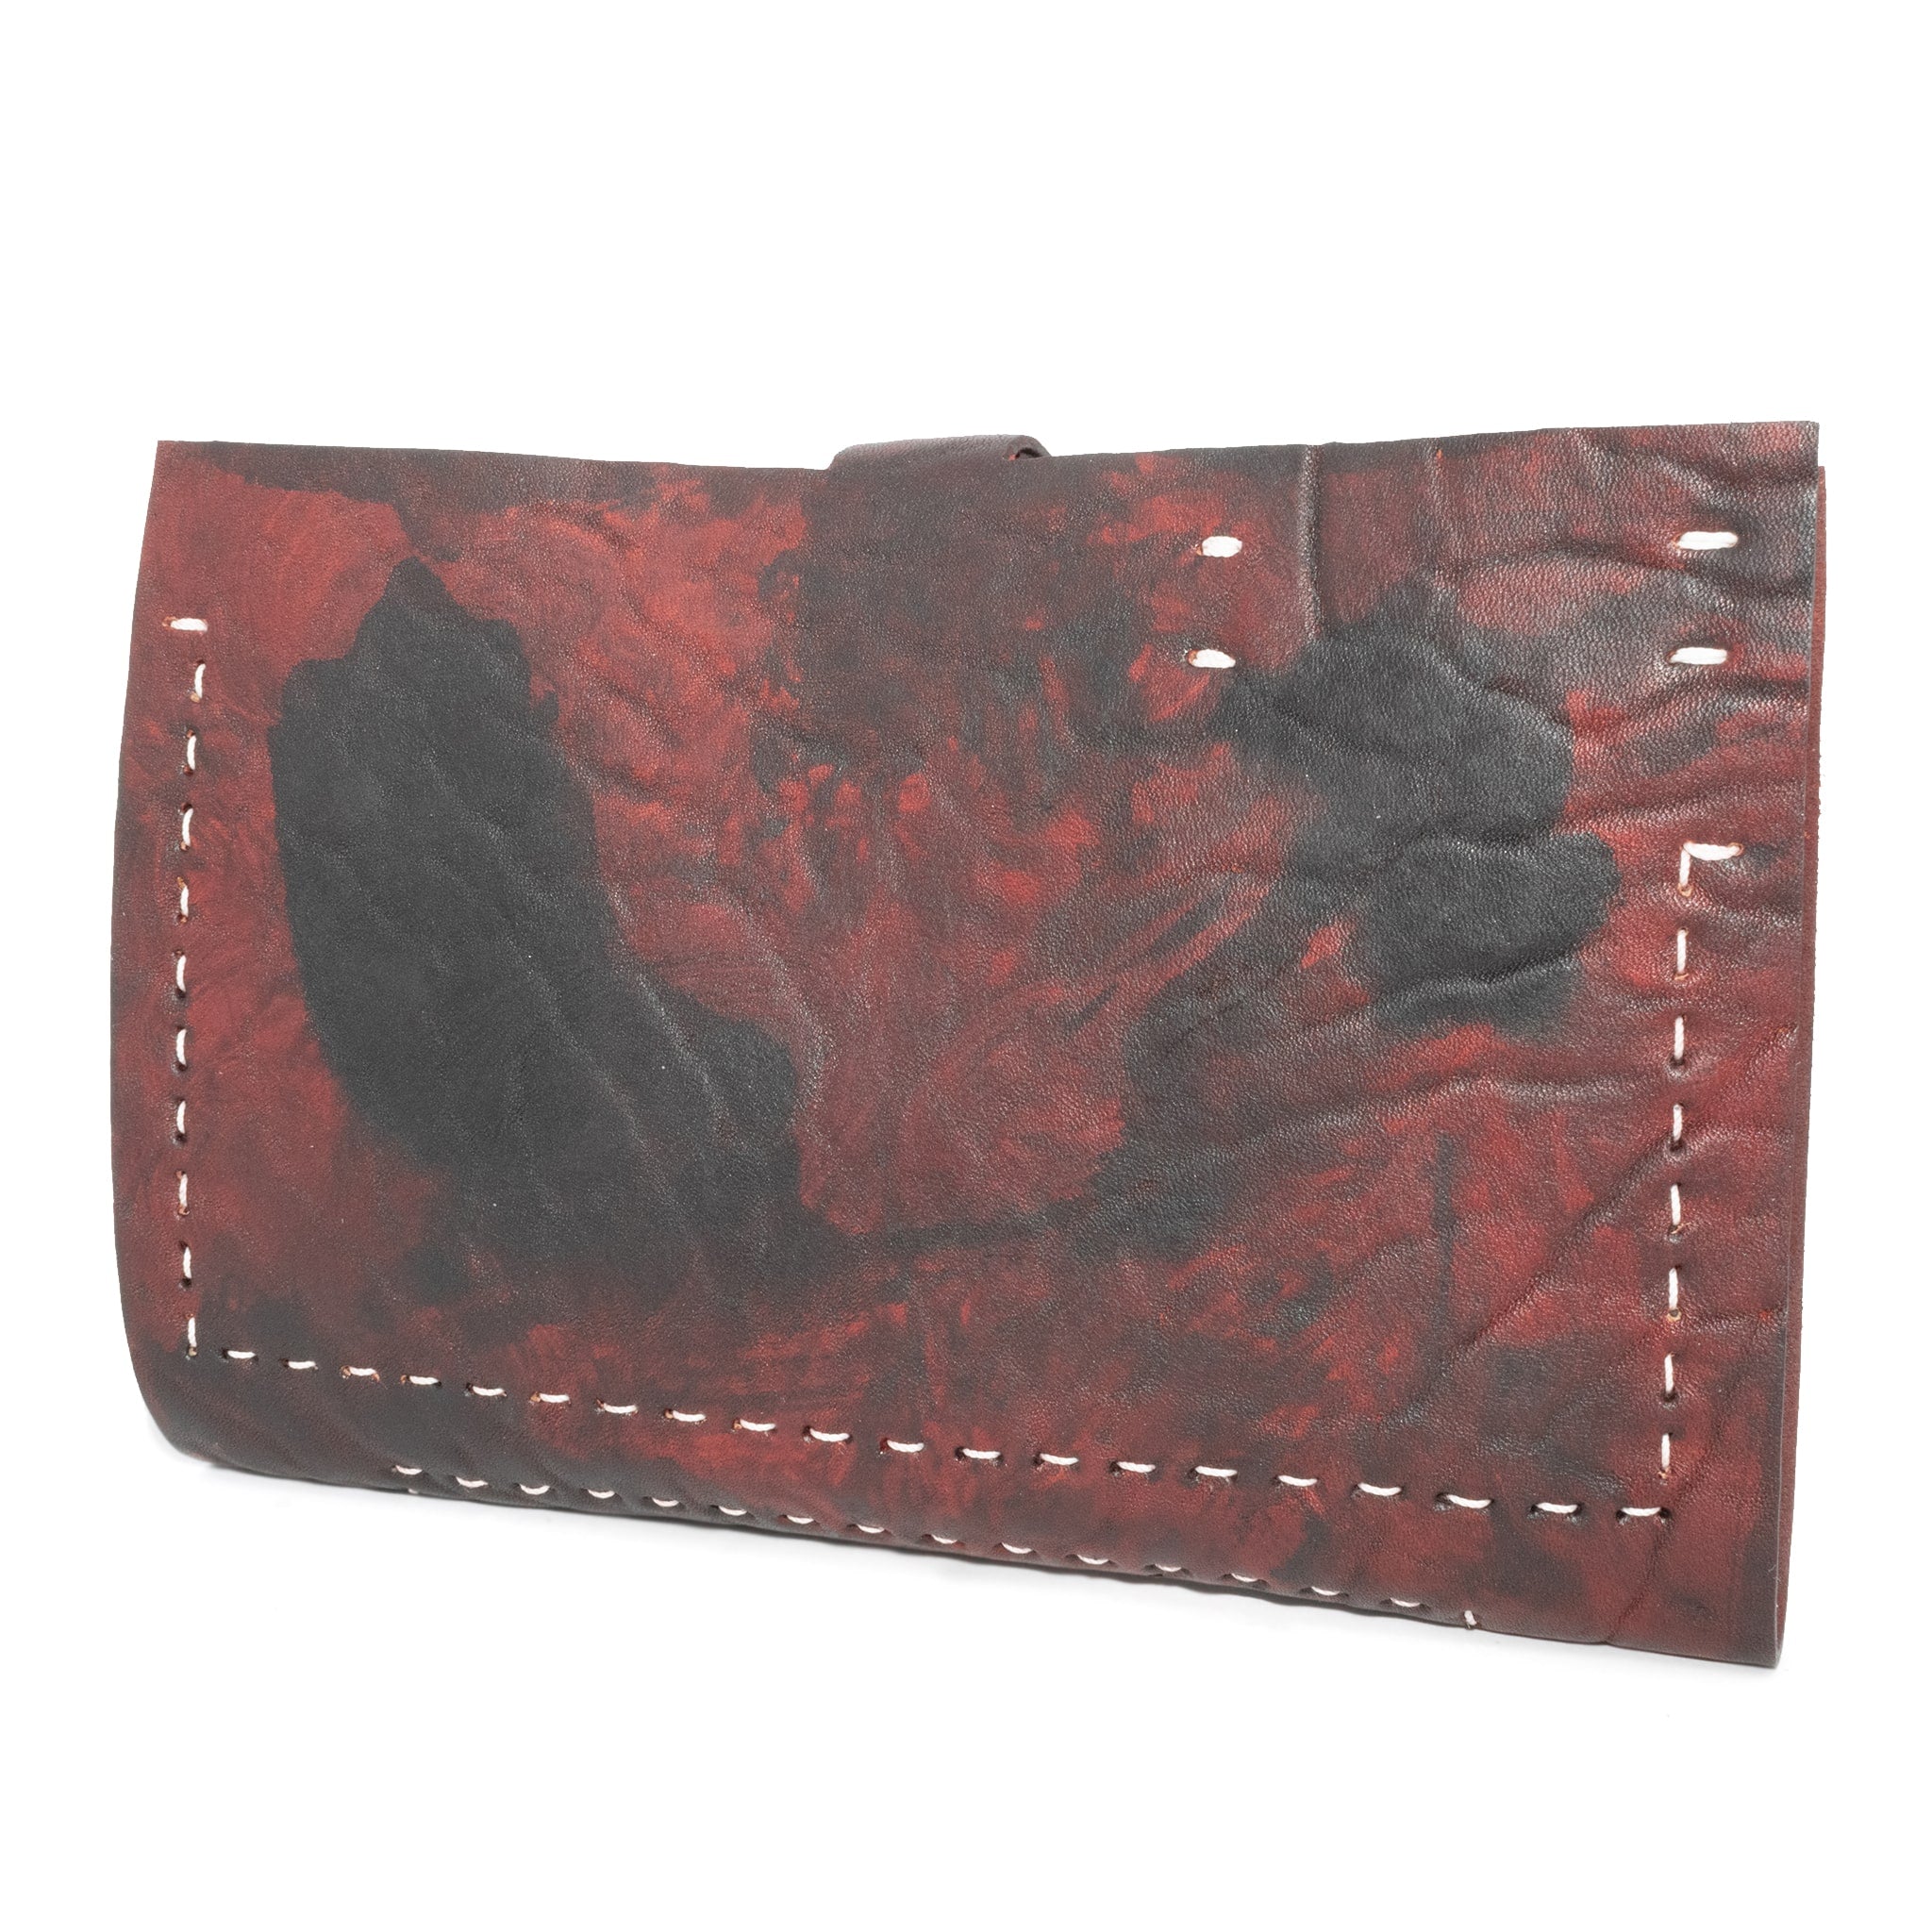 atelier skn hand dyed avant garde unisex leather wallet